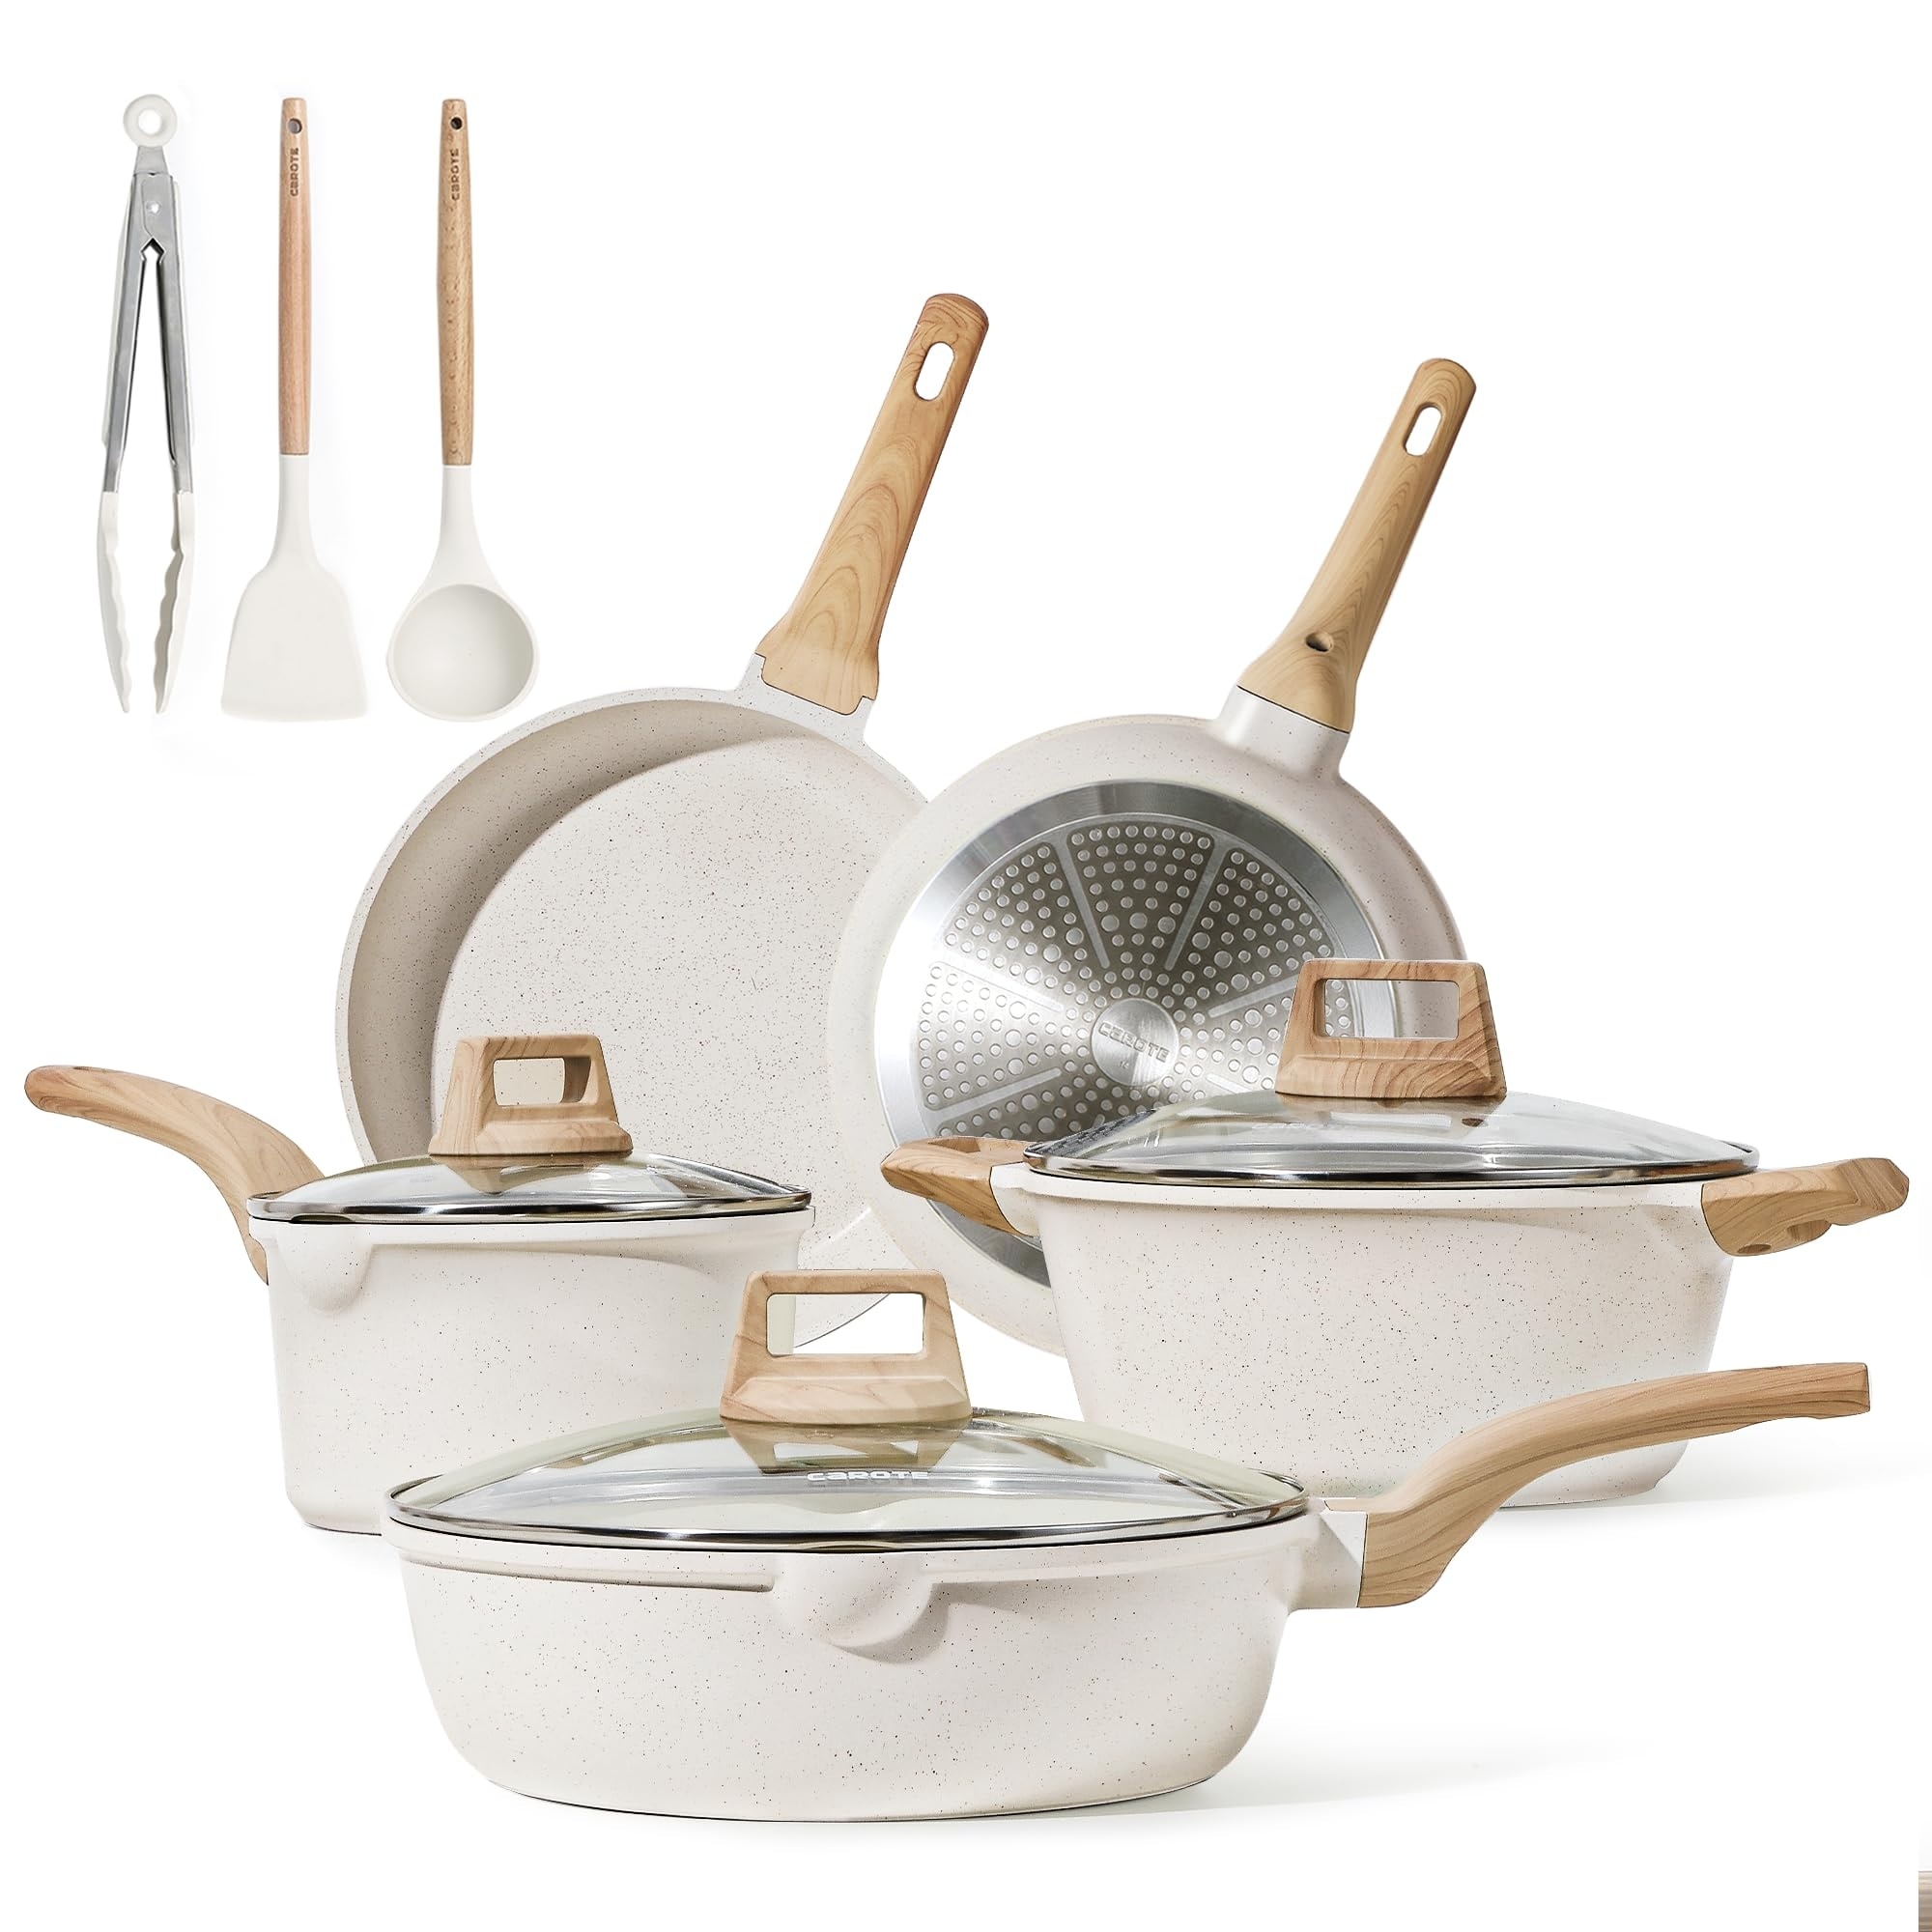 https://ak1.ostkcdn.com/images/products/is/images/direct/ee7f75e141ded6c8747d3d76fc6eaaabe7df6ea9/Pots-and-Pans-Set-Nonstick%2C-Induction-Kitchen-Cookware-Sets%2C-11-Pcs-Non-Stick-Cooking-Set-w-Frying-Pans-%26-Saucepans.jpg